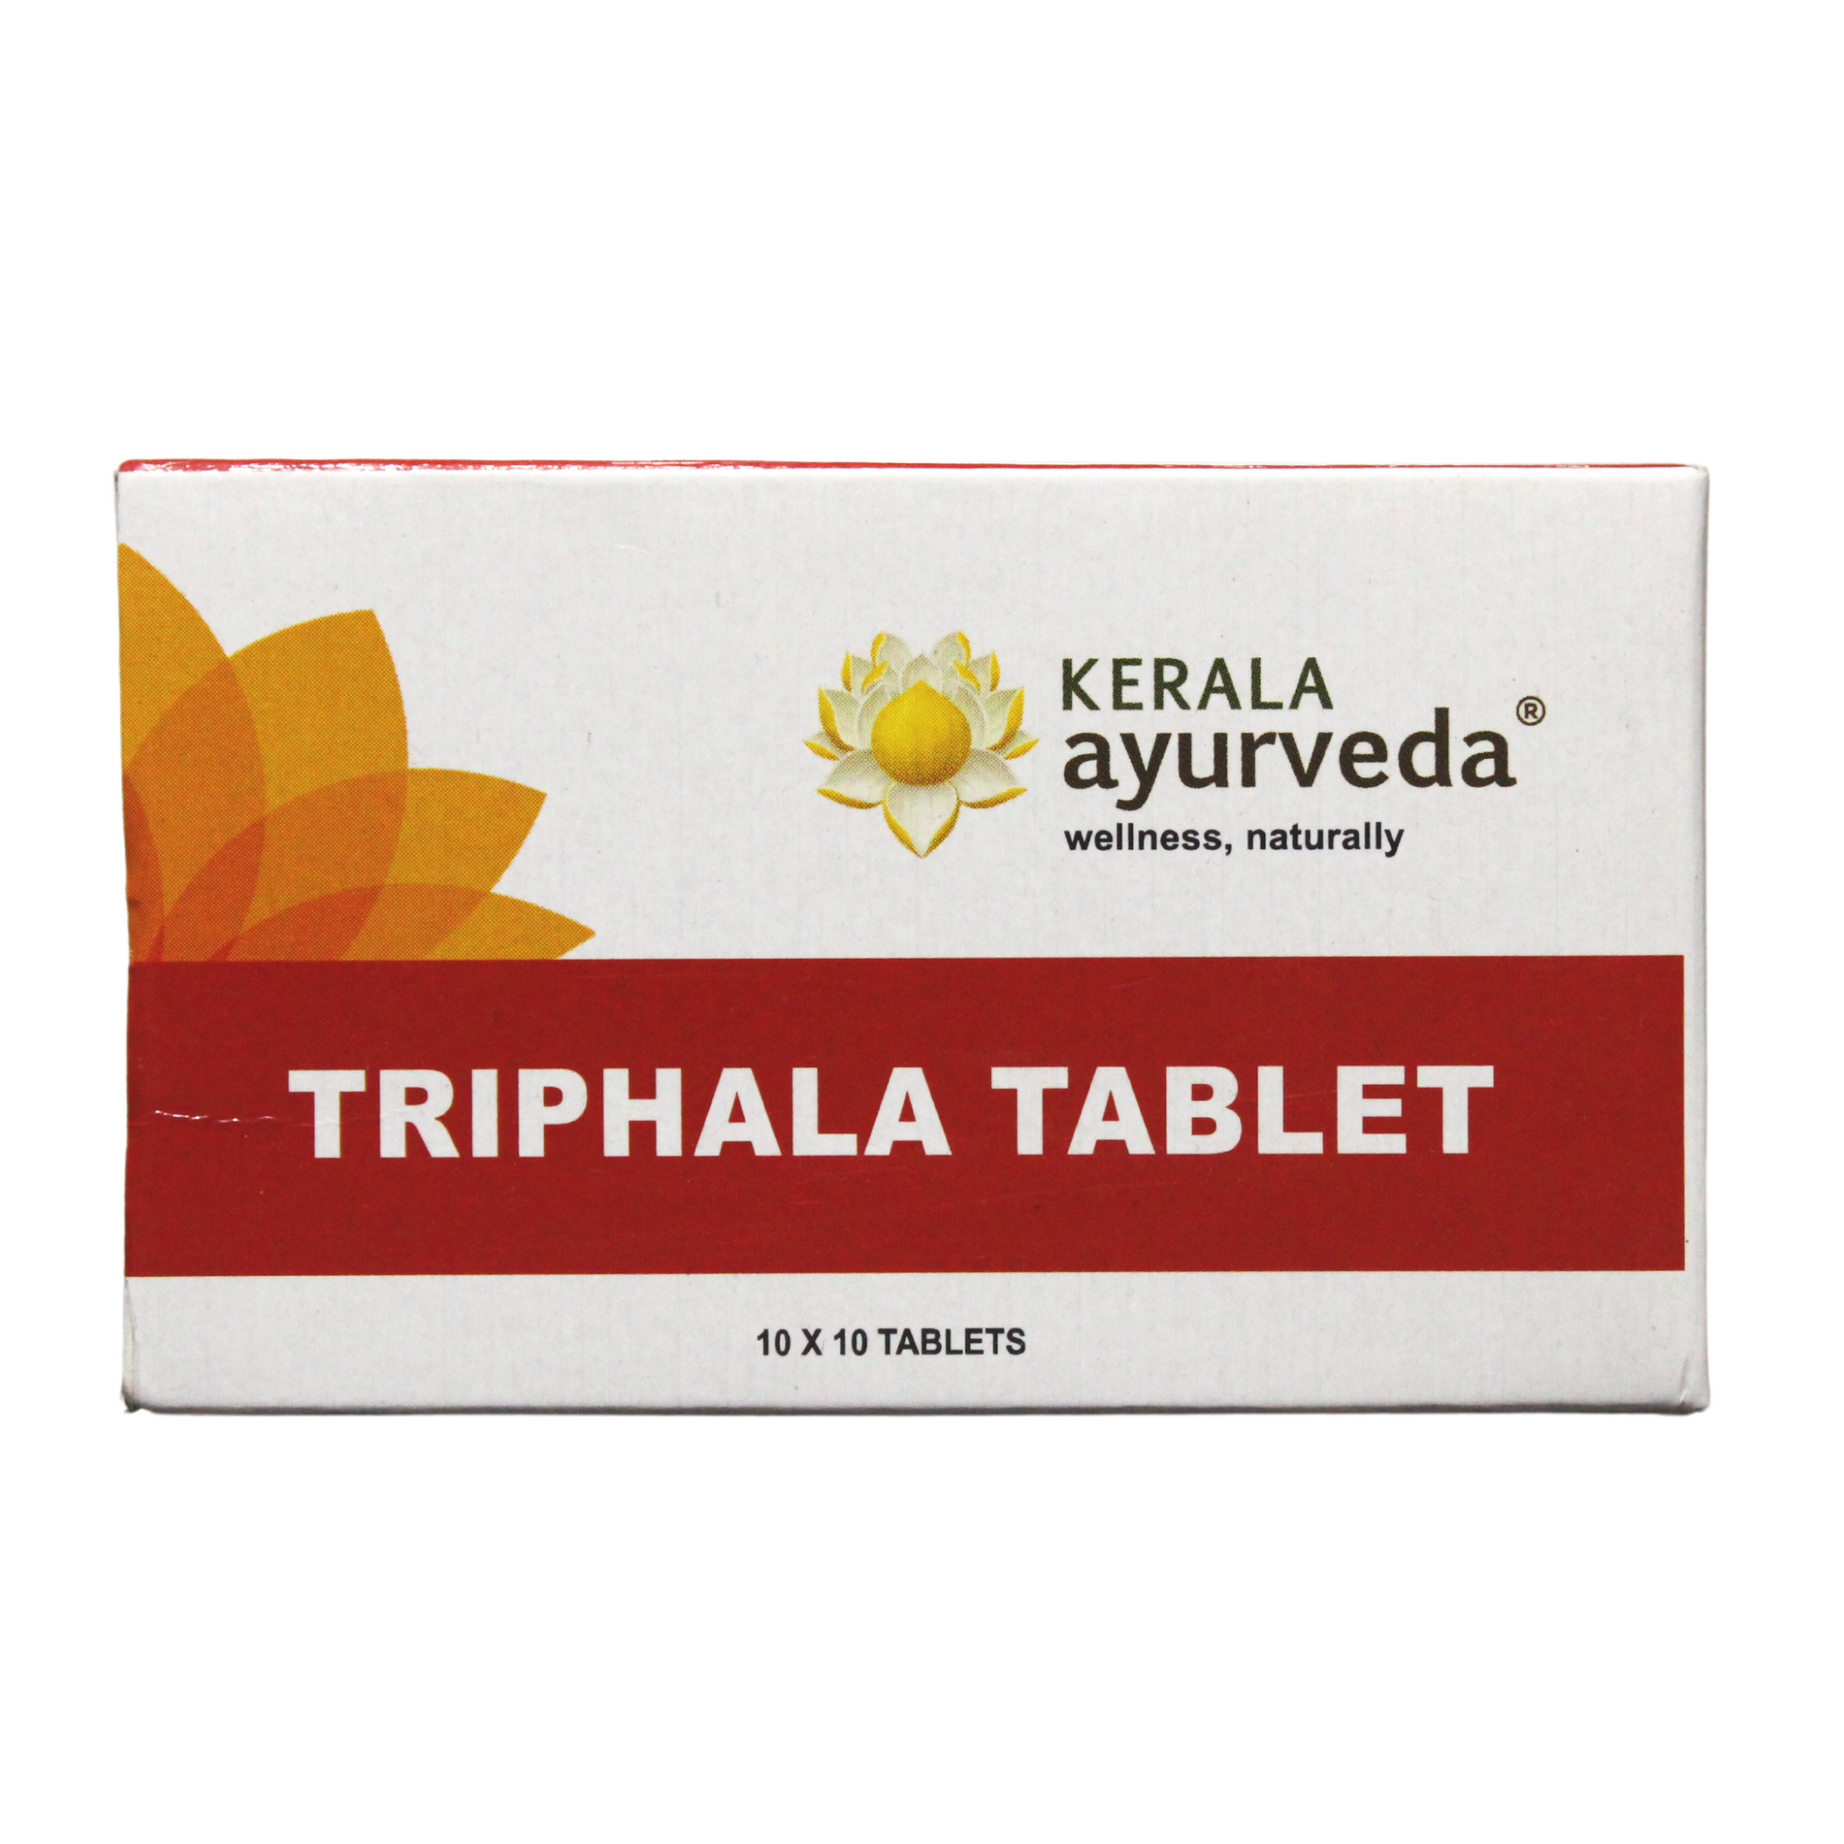 Shop Kerala Ayurveda Triphala Tablets - 10Tablets at price 22.00 from Kerala Ayurveda Online - Ayush Care